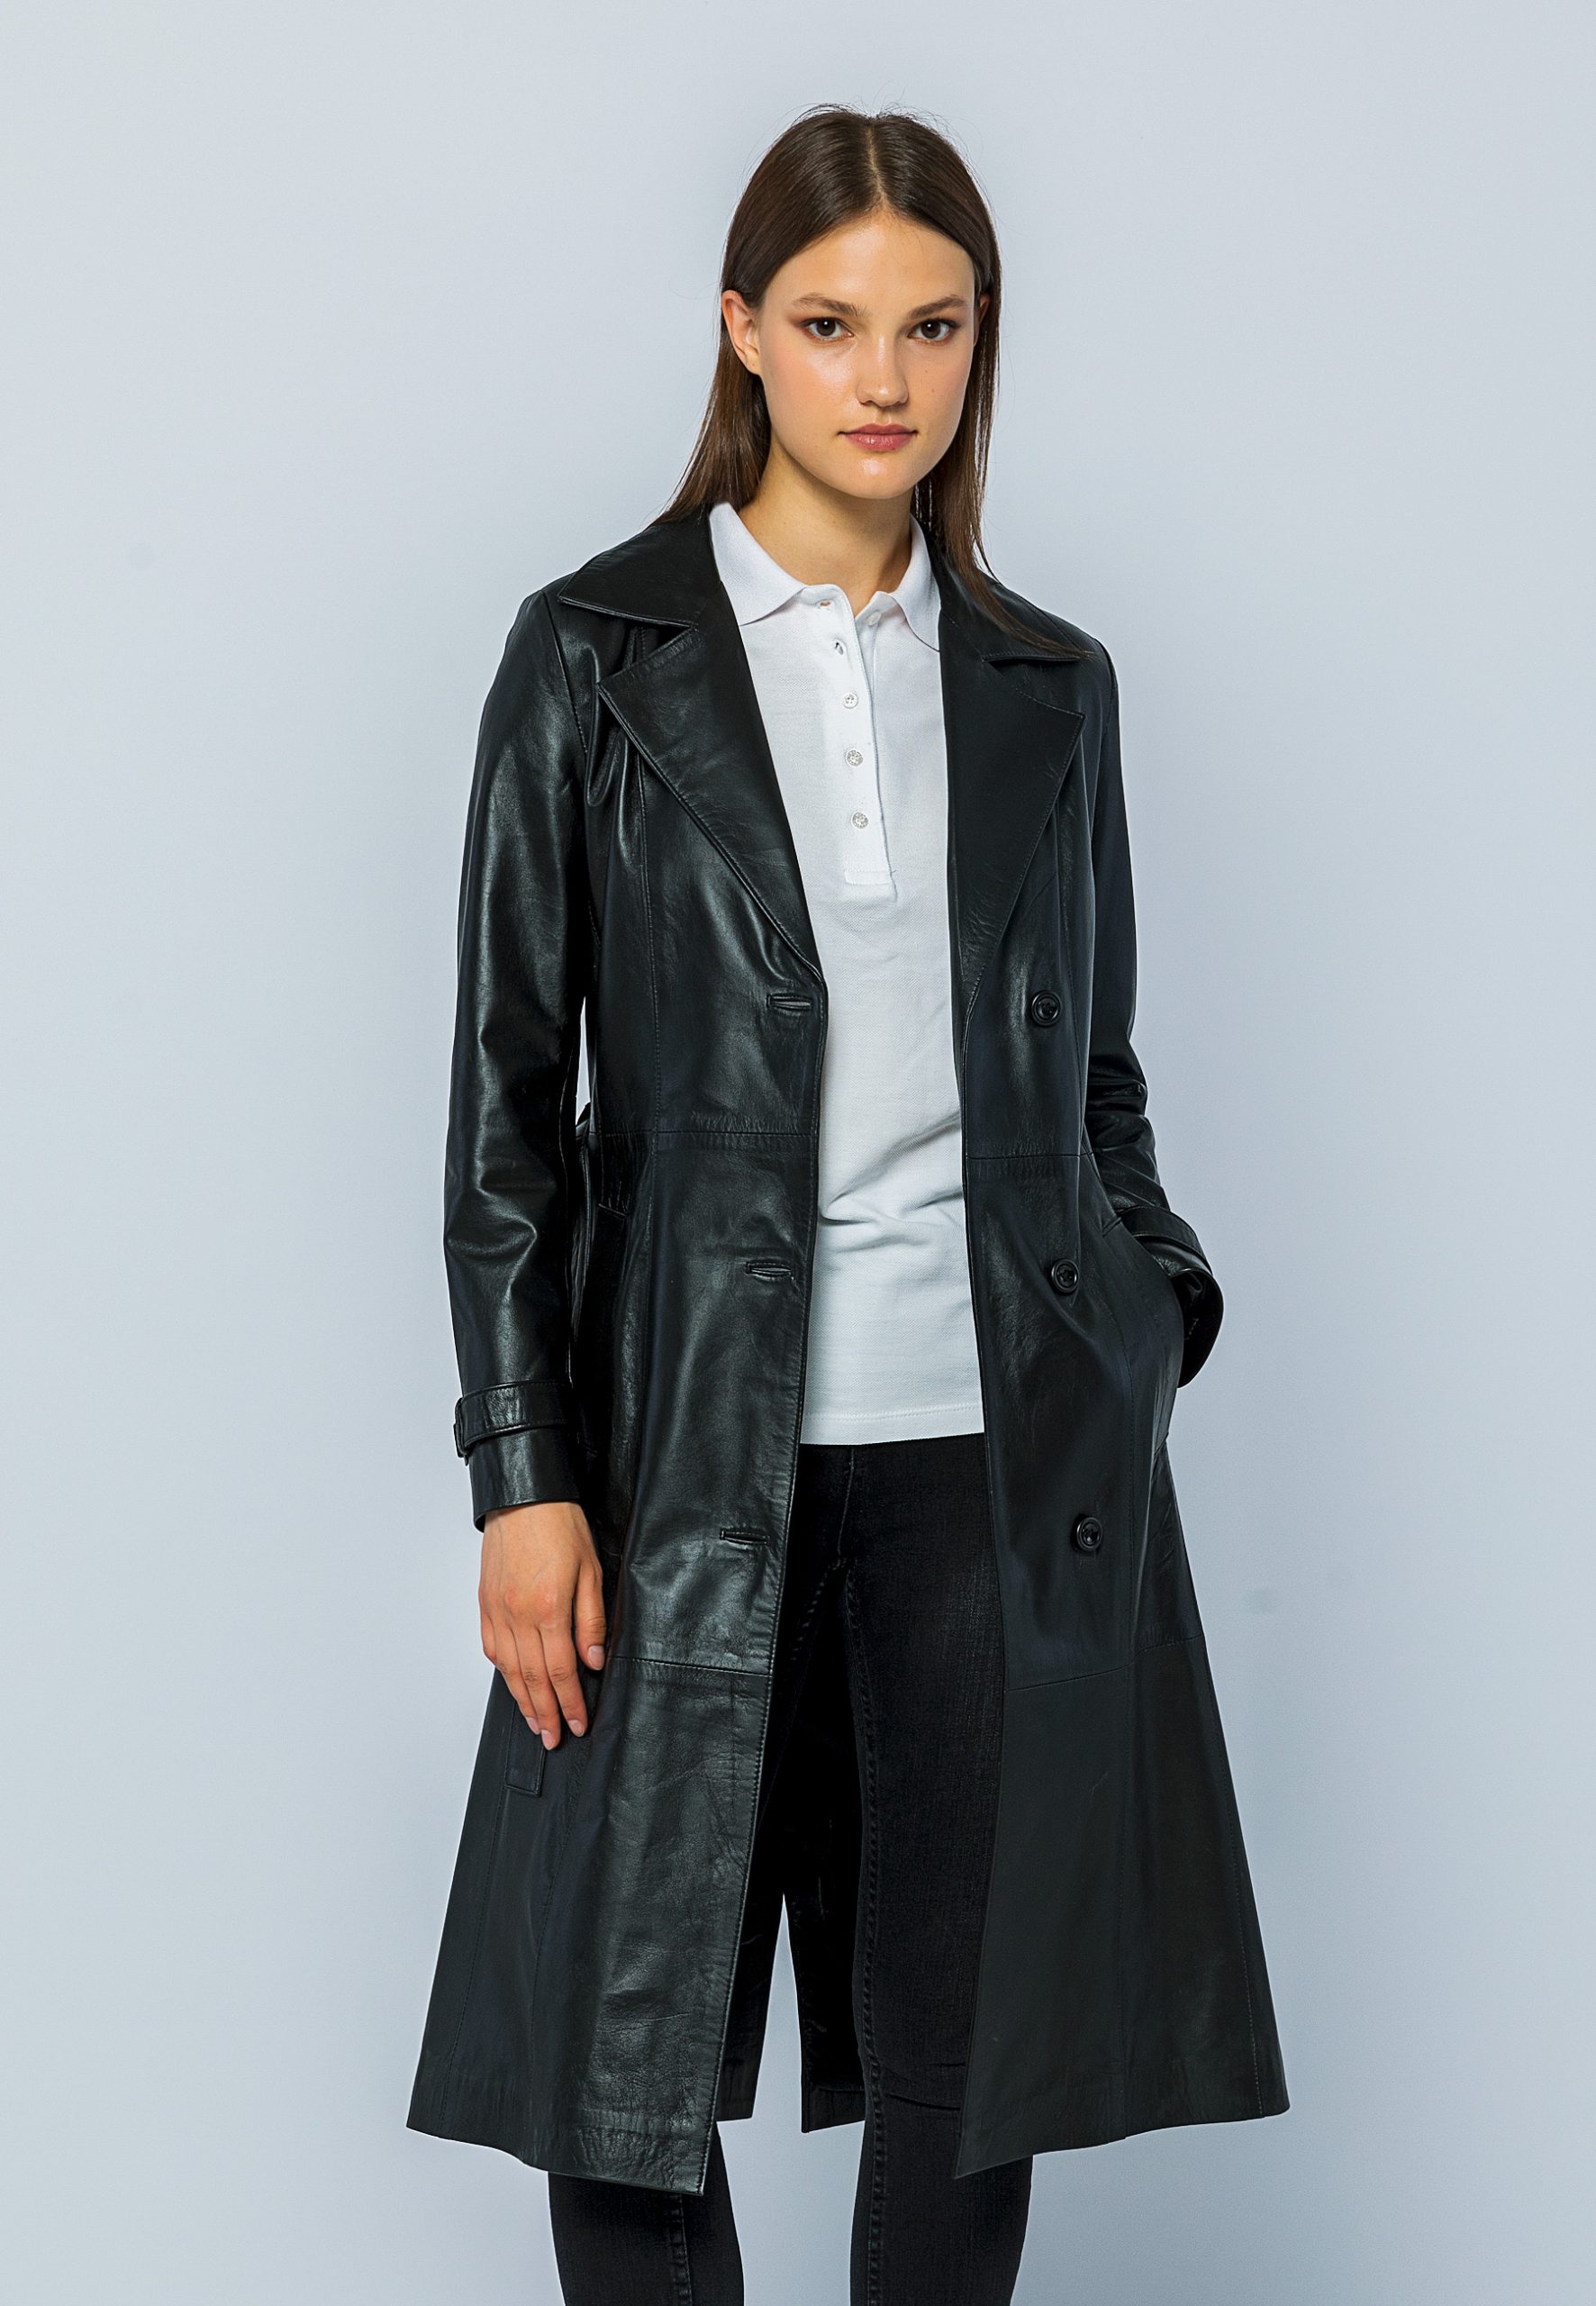 Basics&More Women's Black Long Trench Leather Jacket - Basics&More